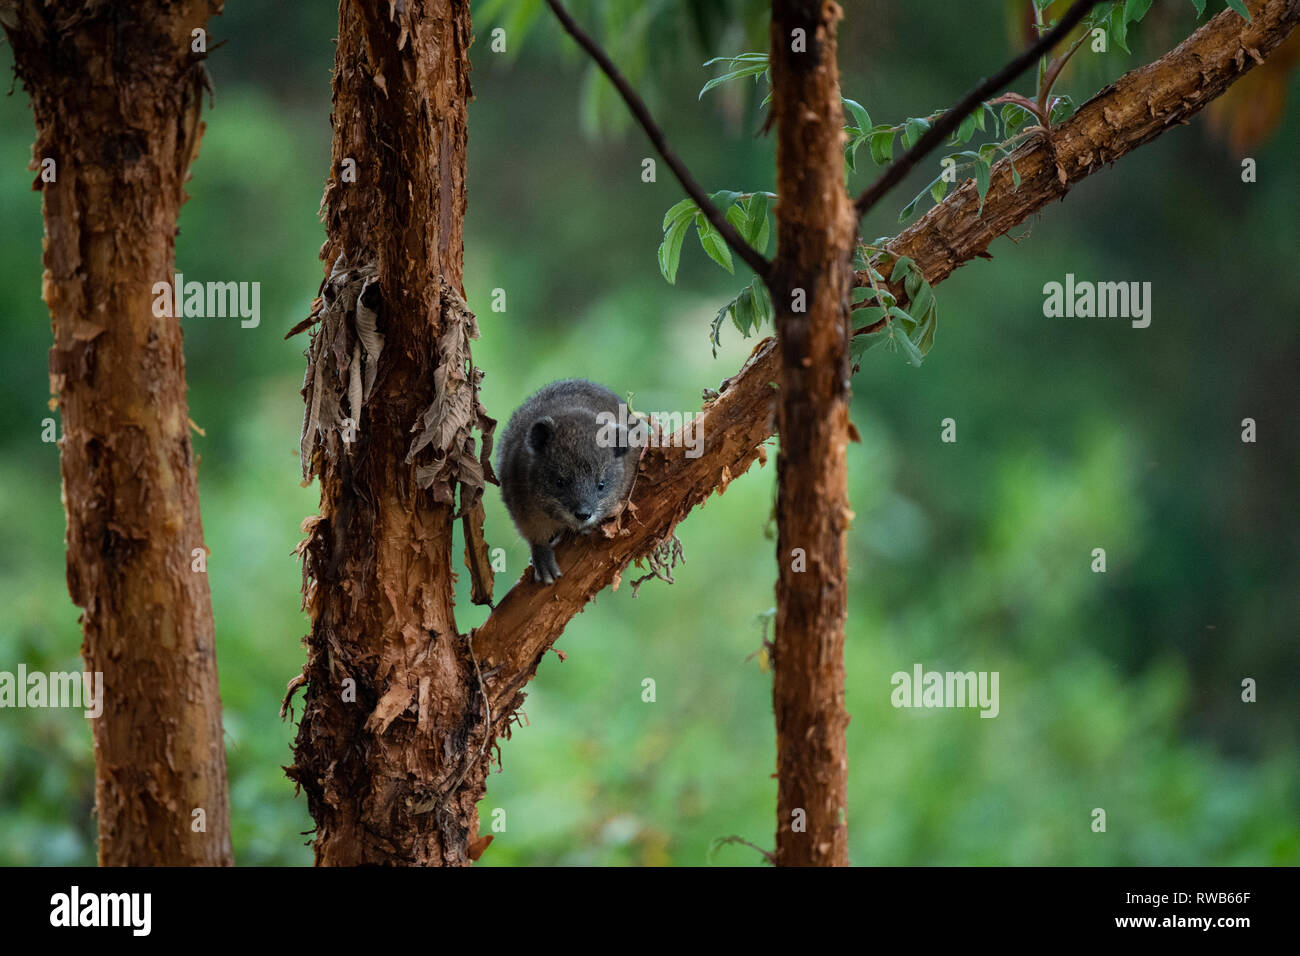 Southern tree hyrax, Dendrohyrax arboreus, Mgahinga Gorilla National Park, Uganda Stock Photo